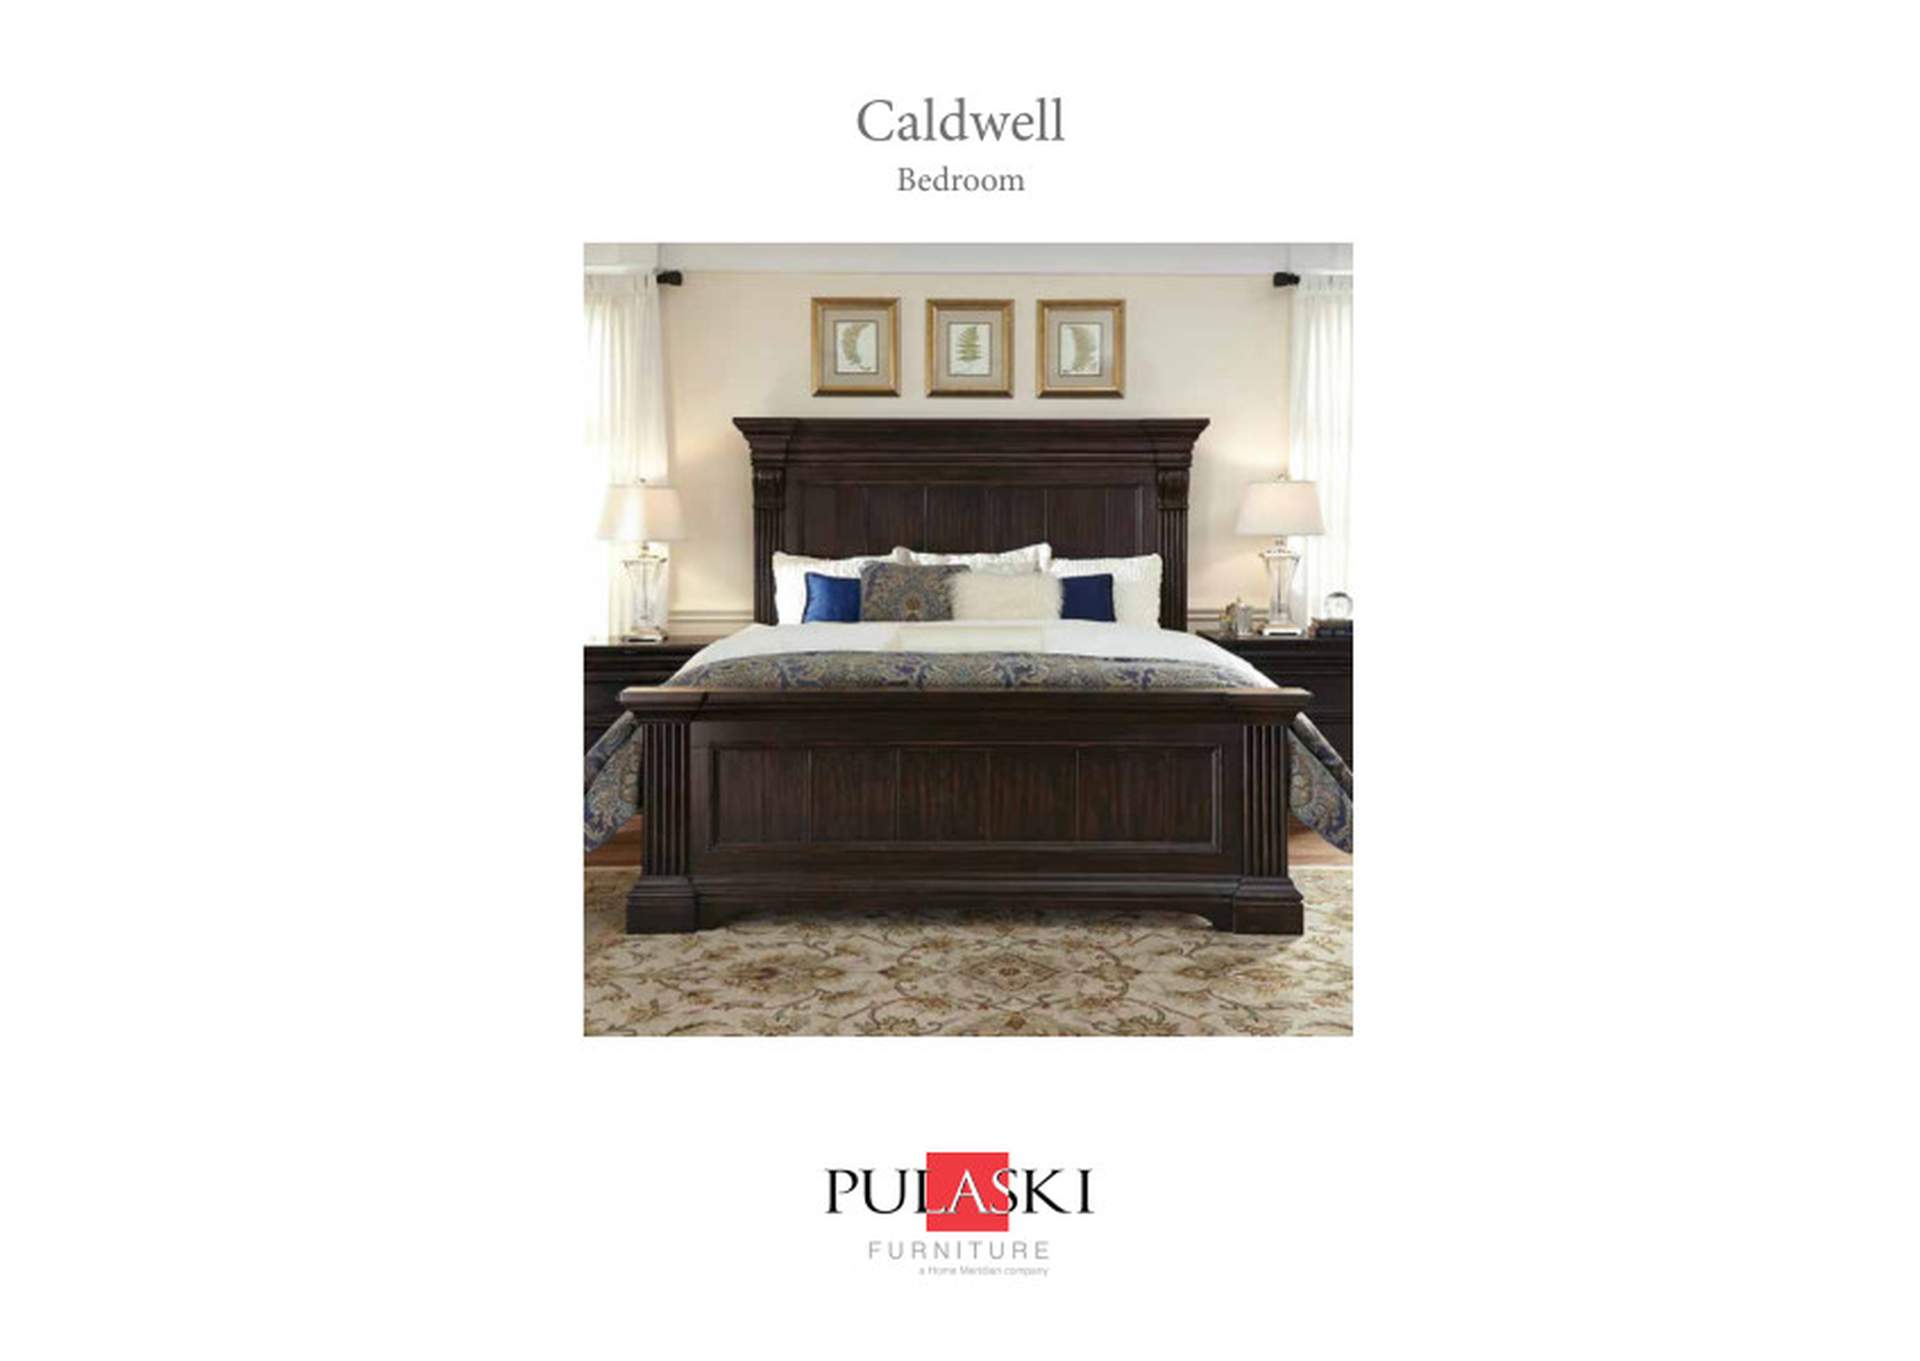 Caldwell 4 Drawer Media Chest,Pulaski Furniture